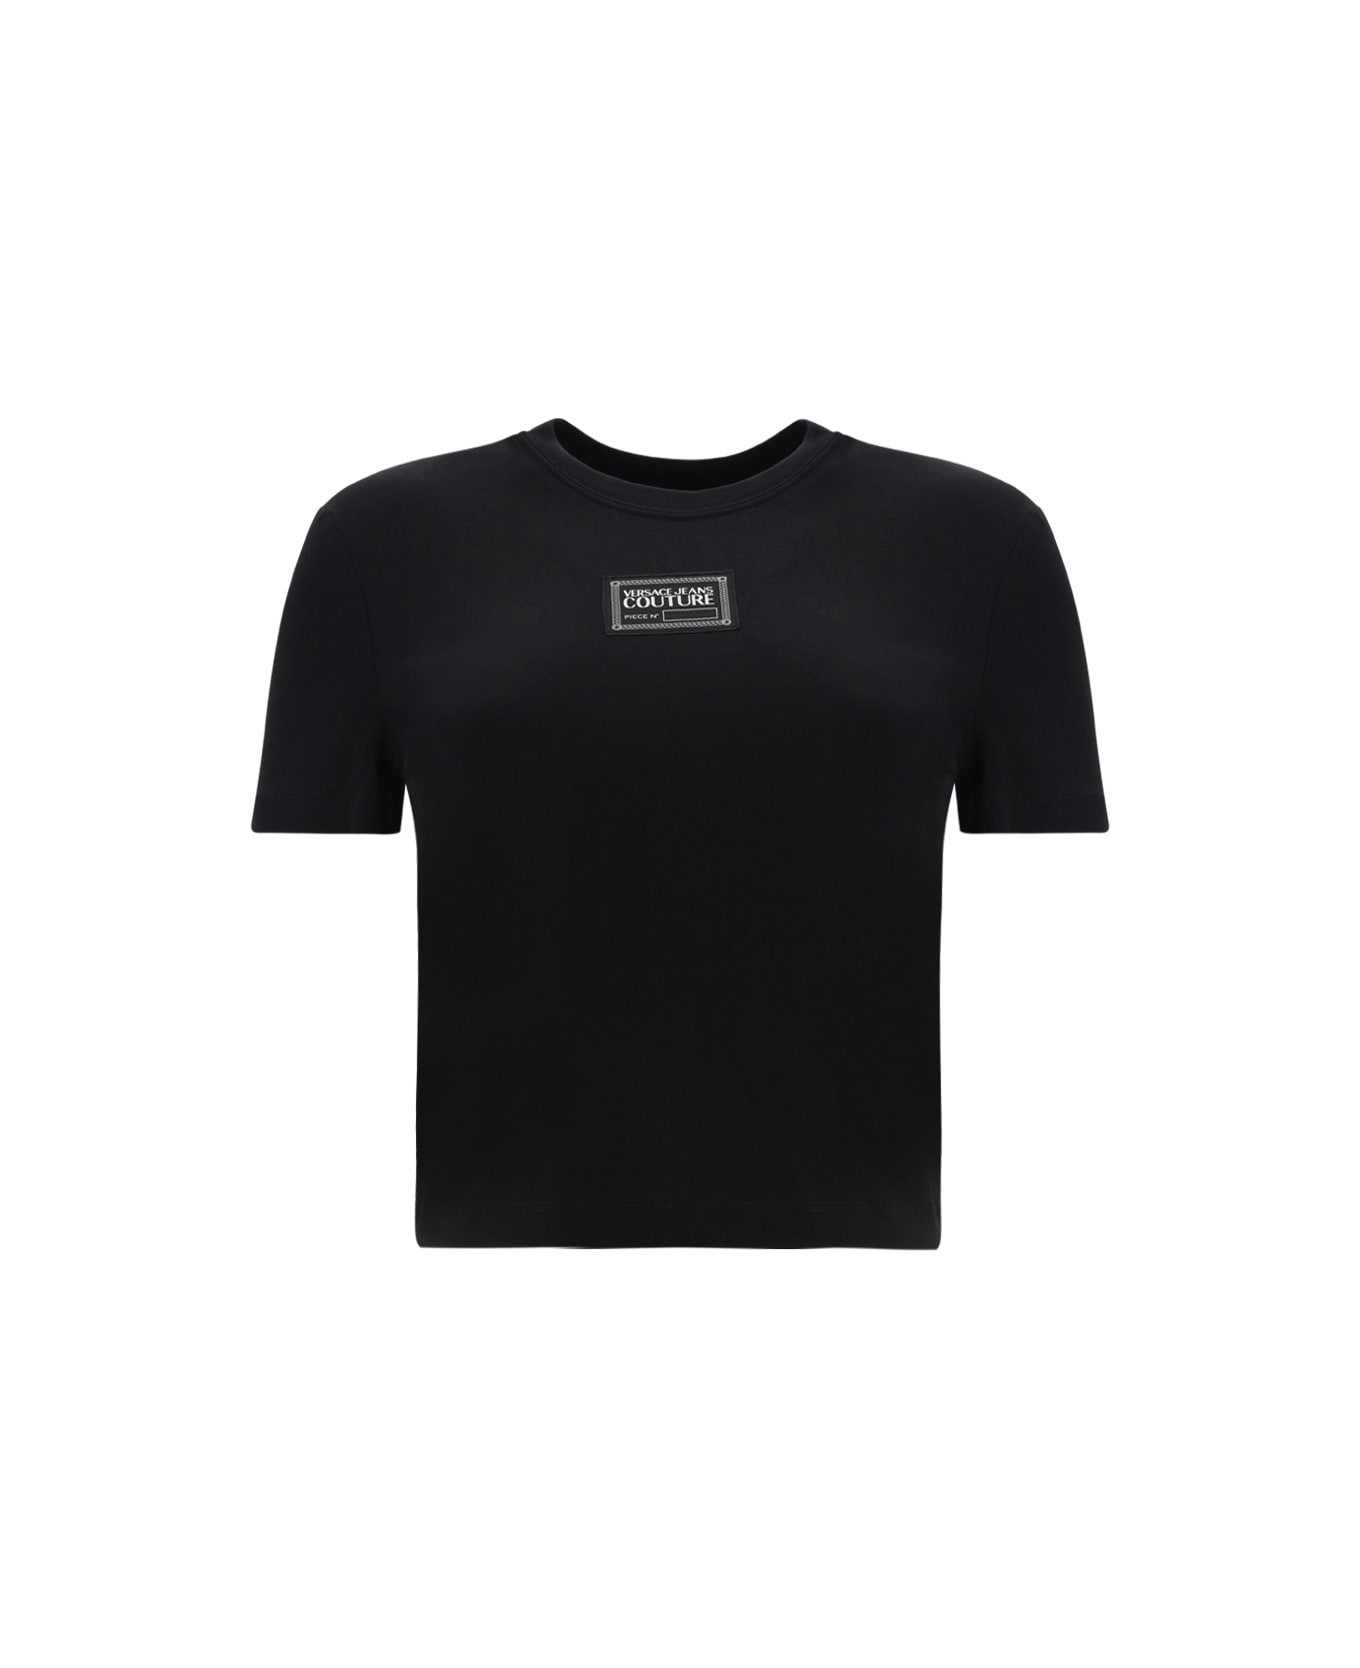 Versace Jeans Couture T-shirt - Black